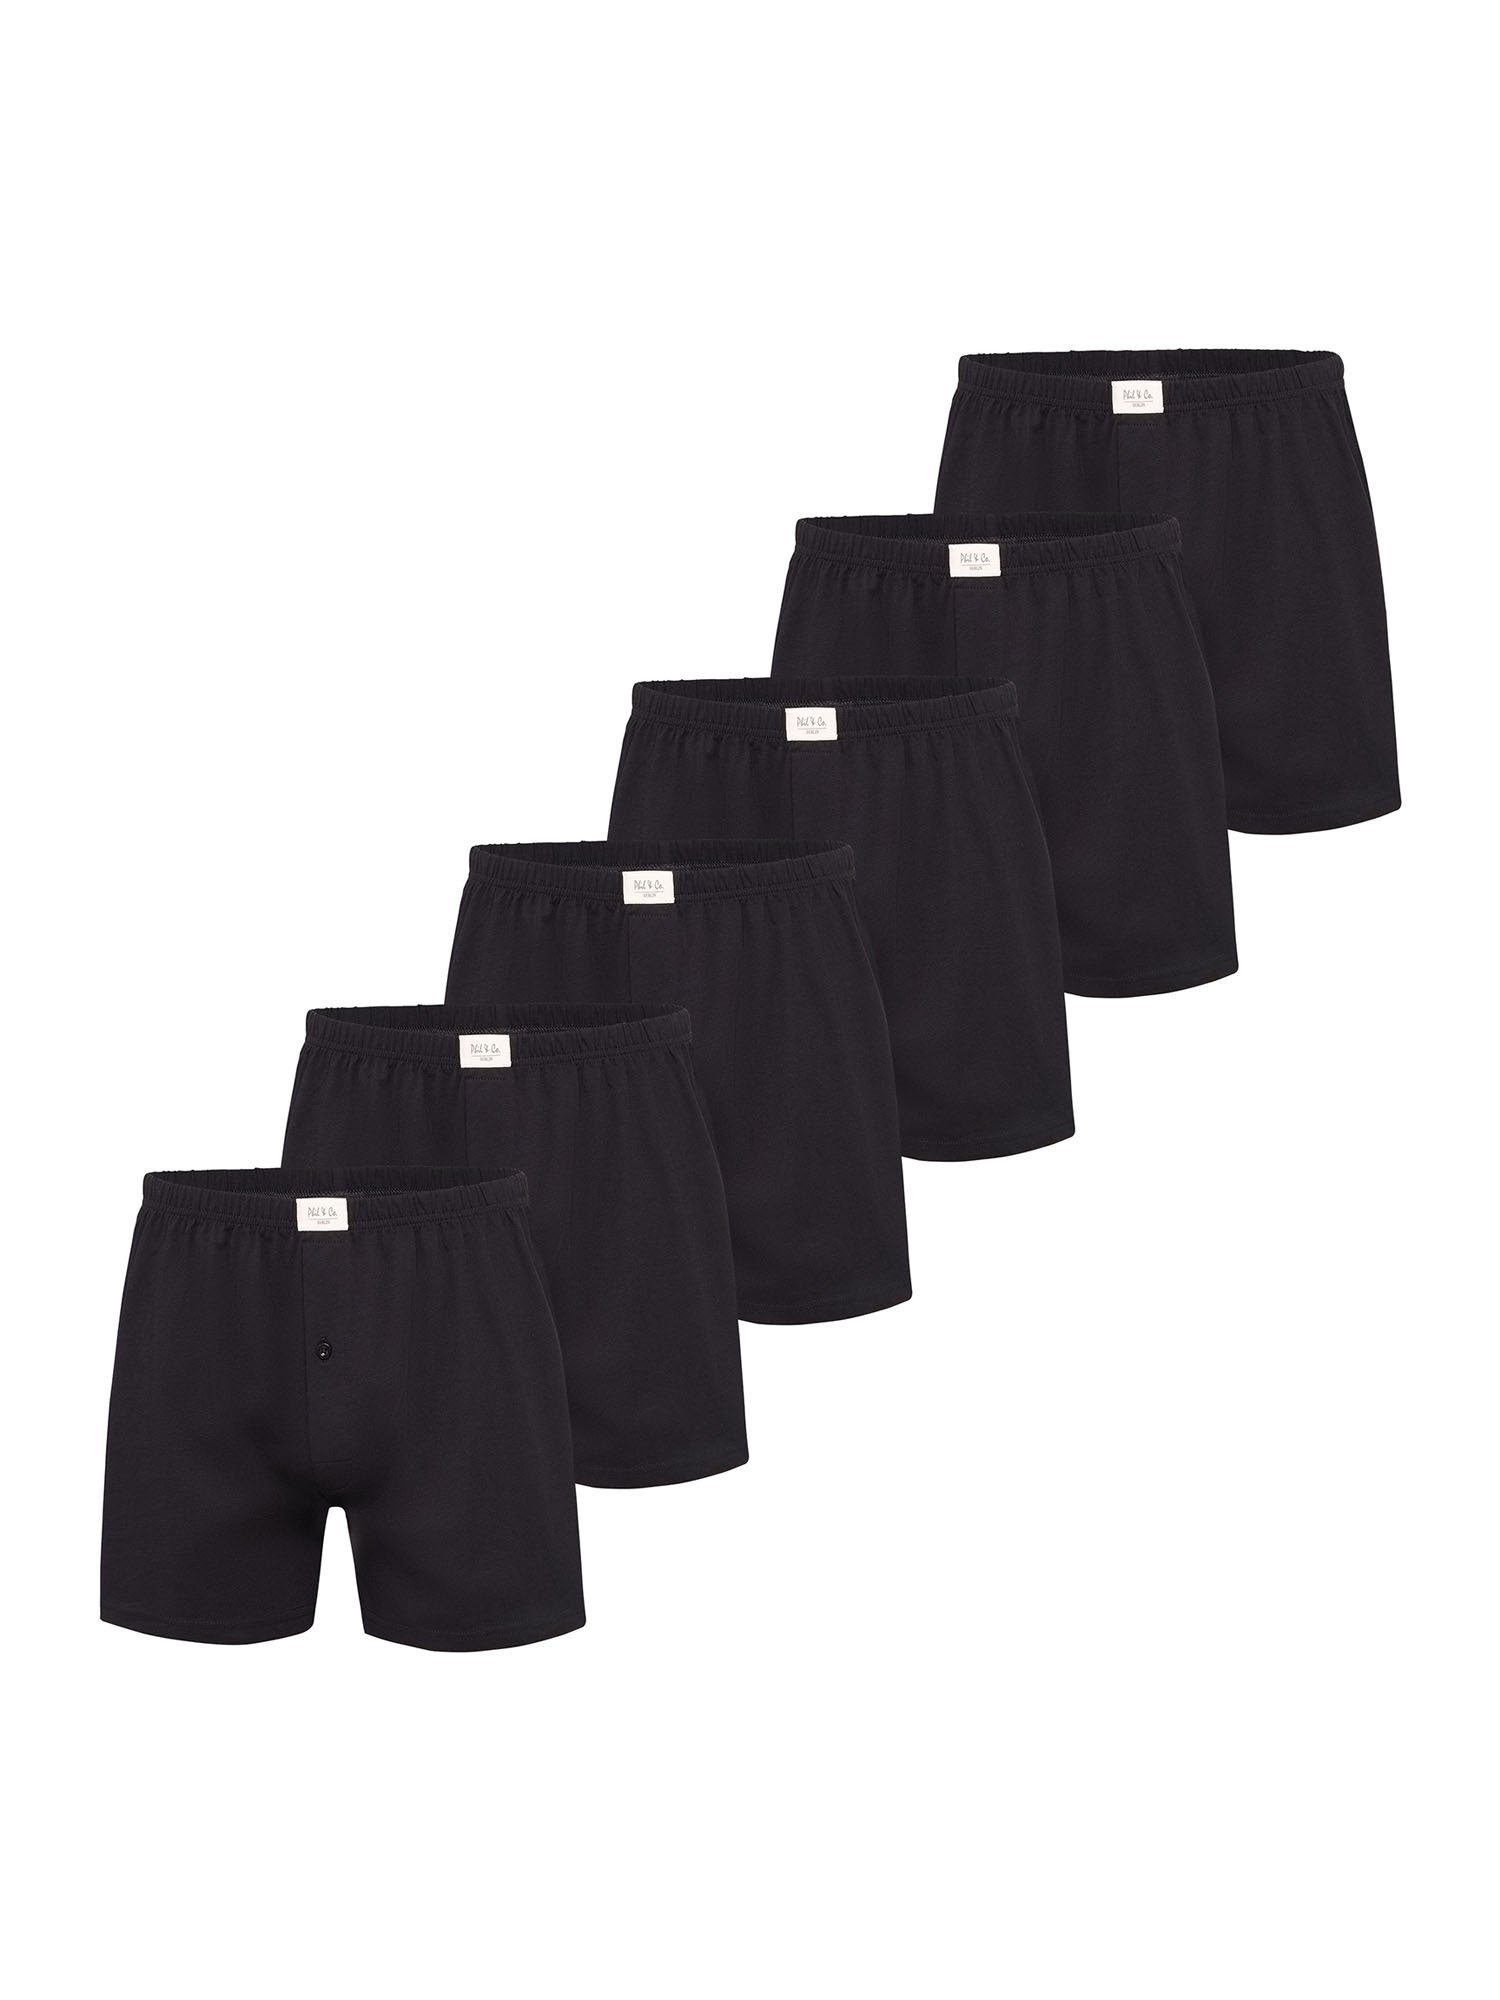 Phil & Co. Boxer Jersey Loose Fit (6-St) black | Boxershorts